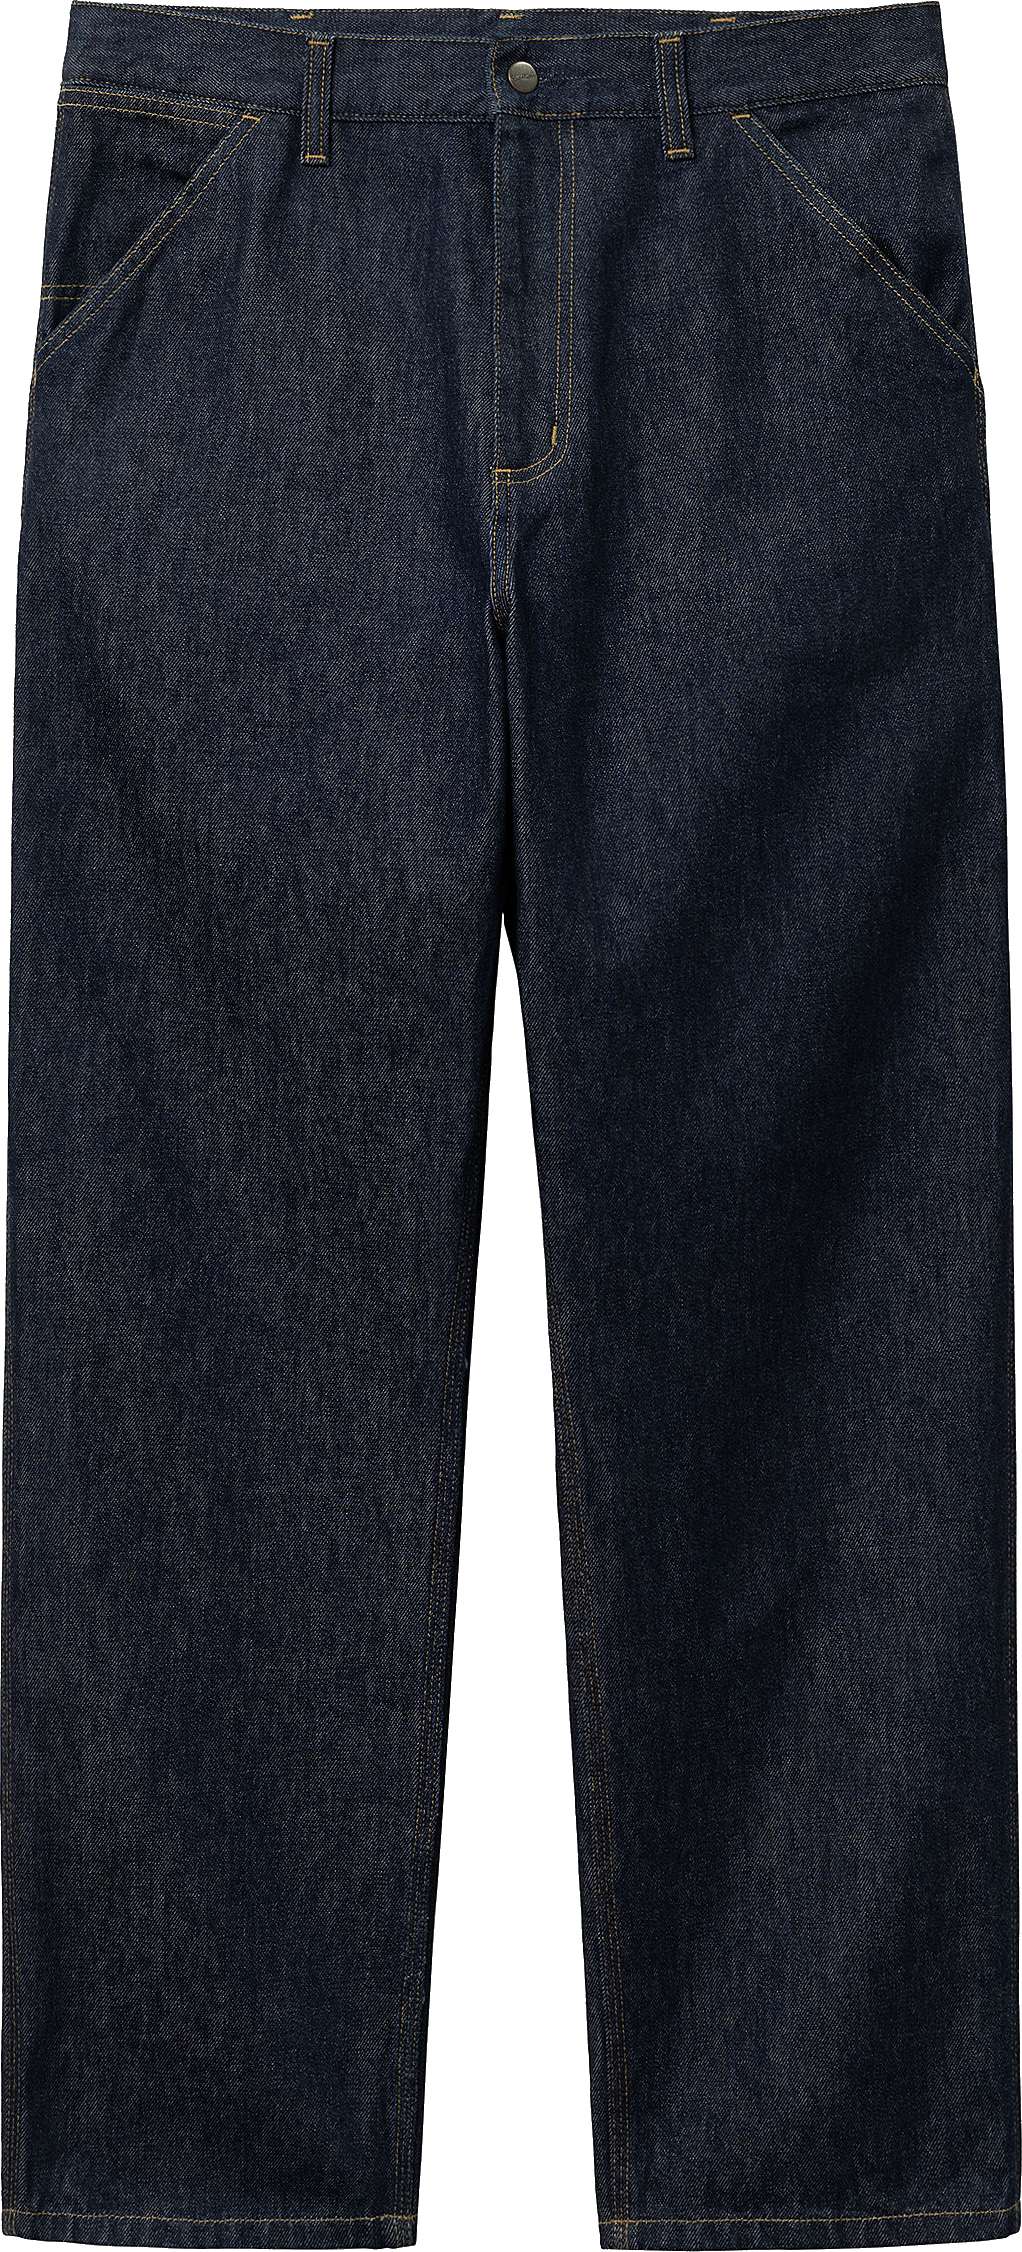  Carhartt Wip Pantaloni Single Knee Pant Blue Rinsed Uomo - 2